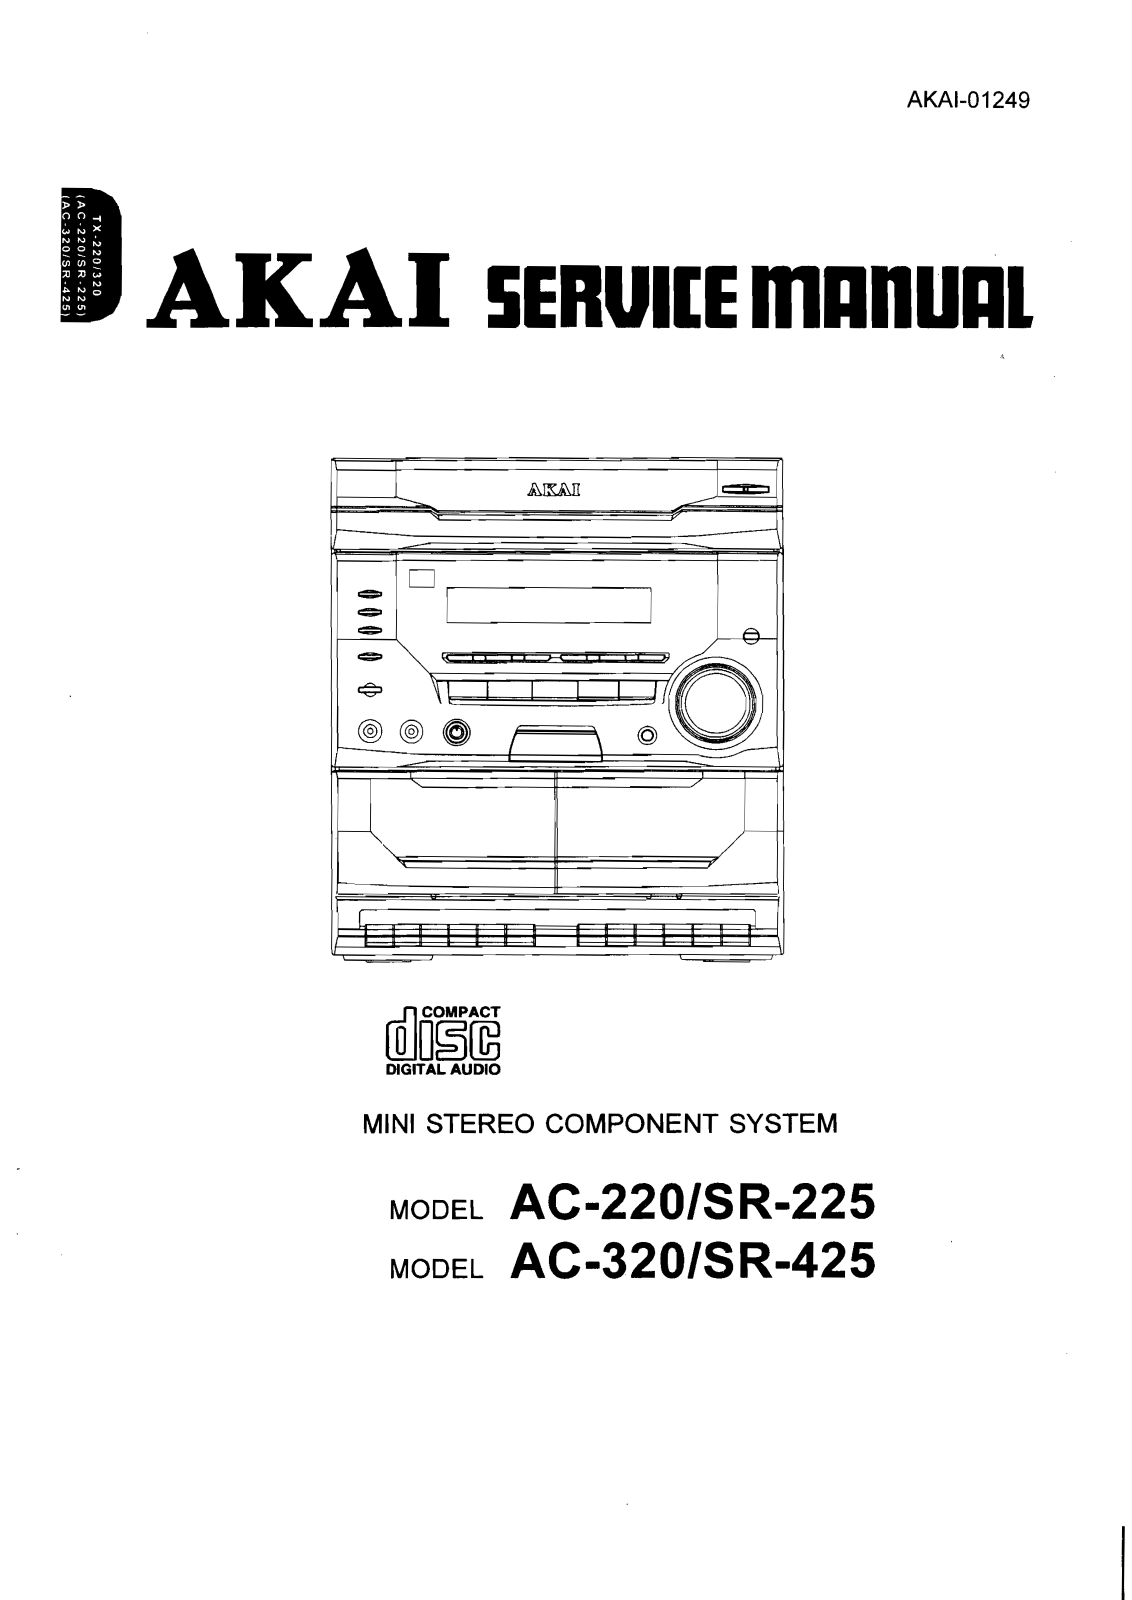 Akai AC-220 Service Manual